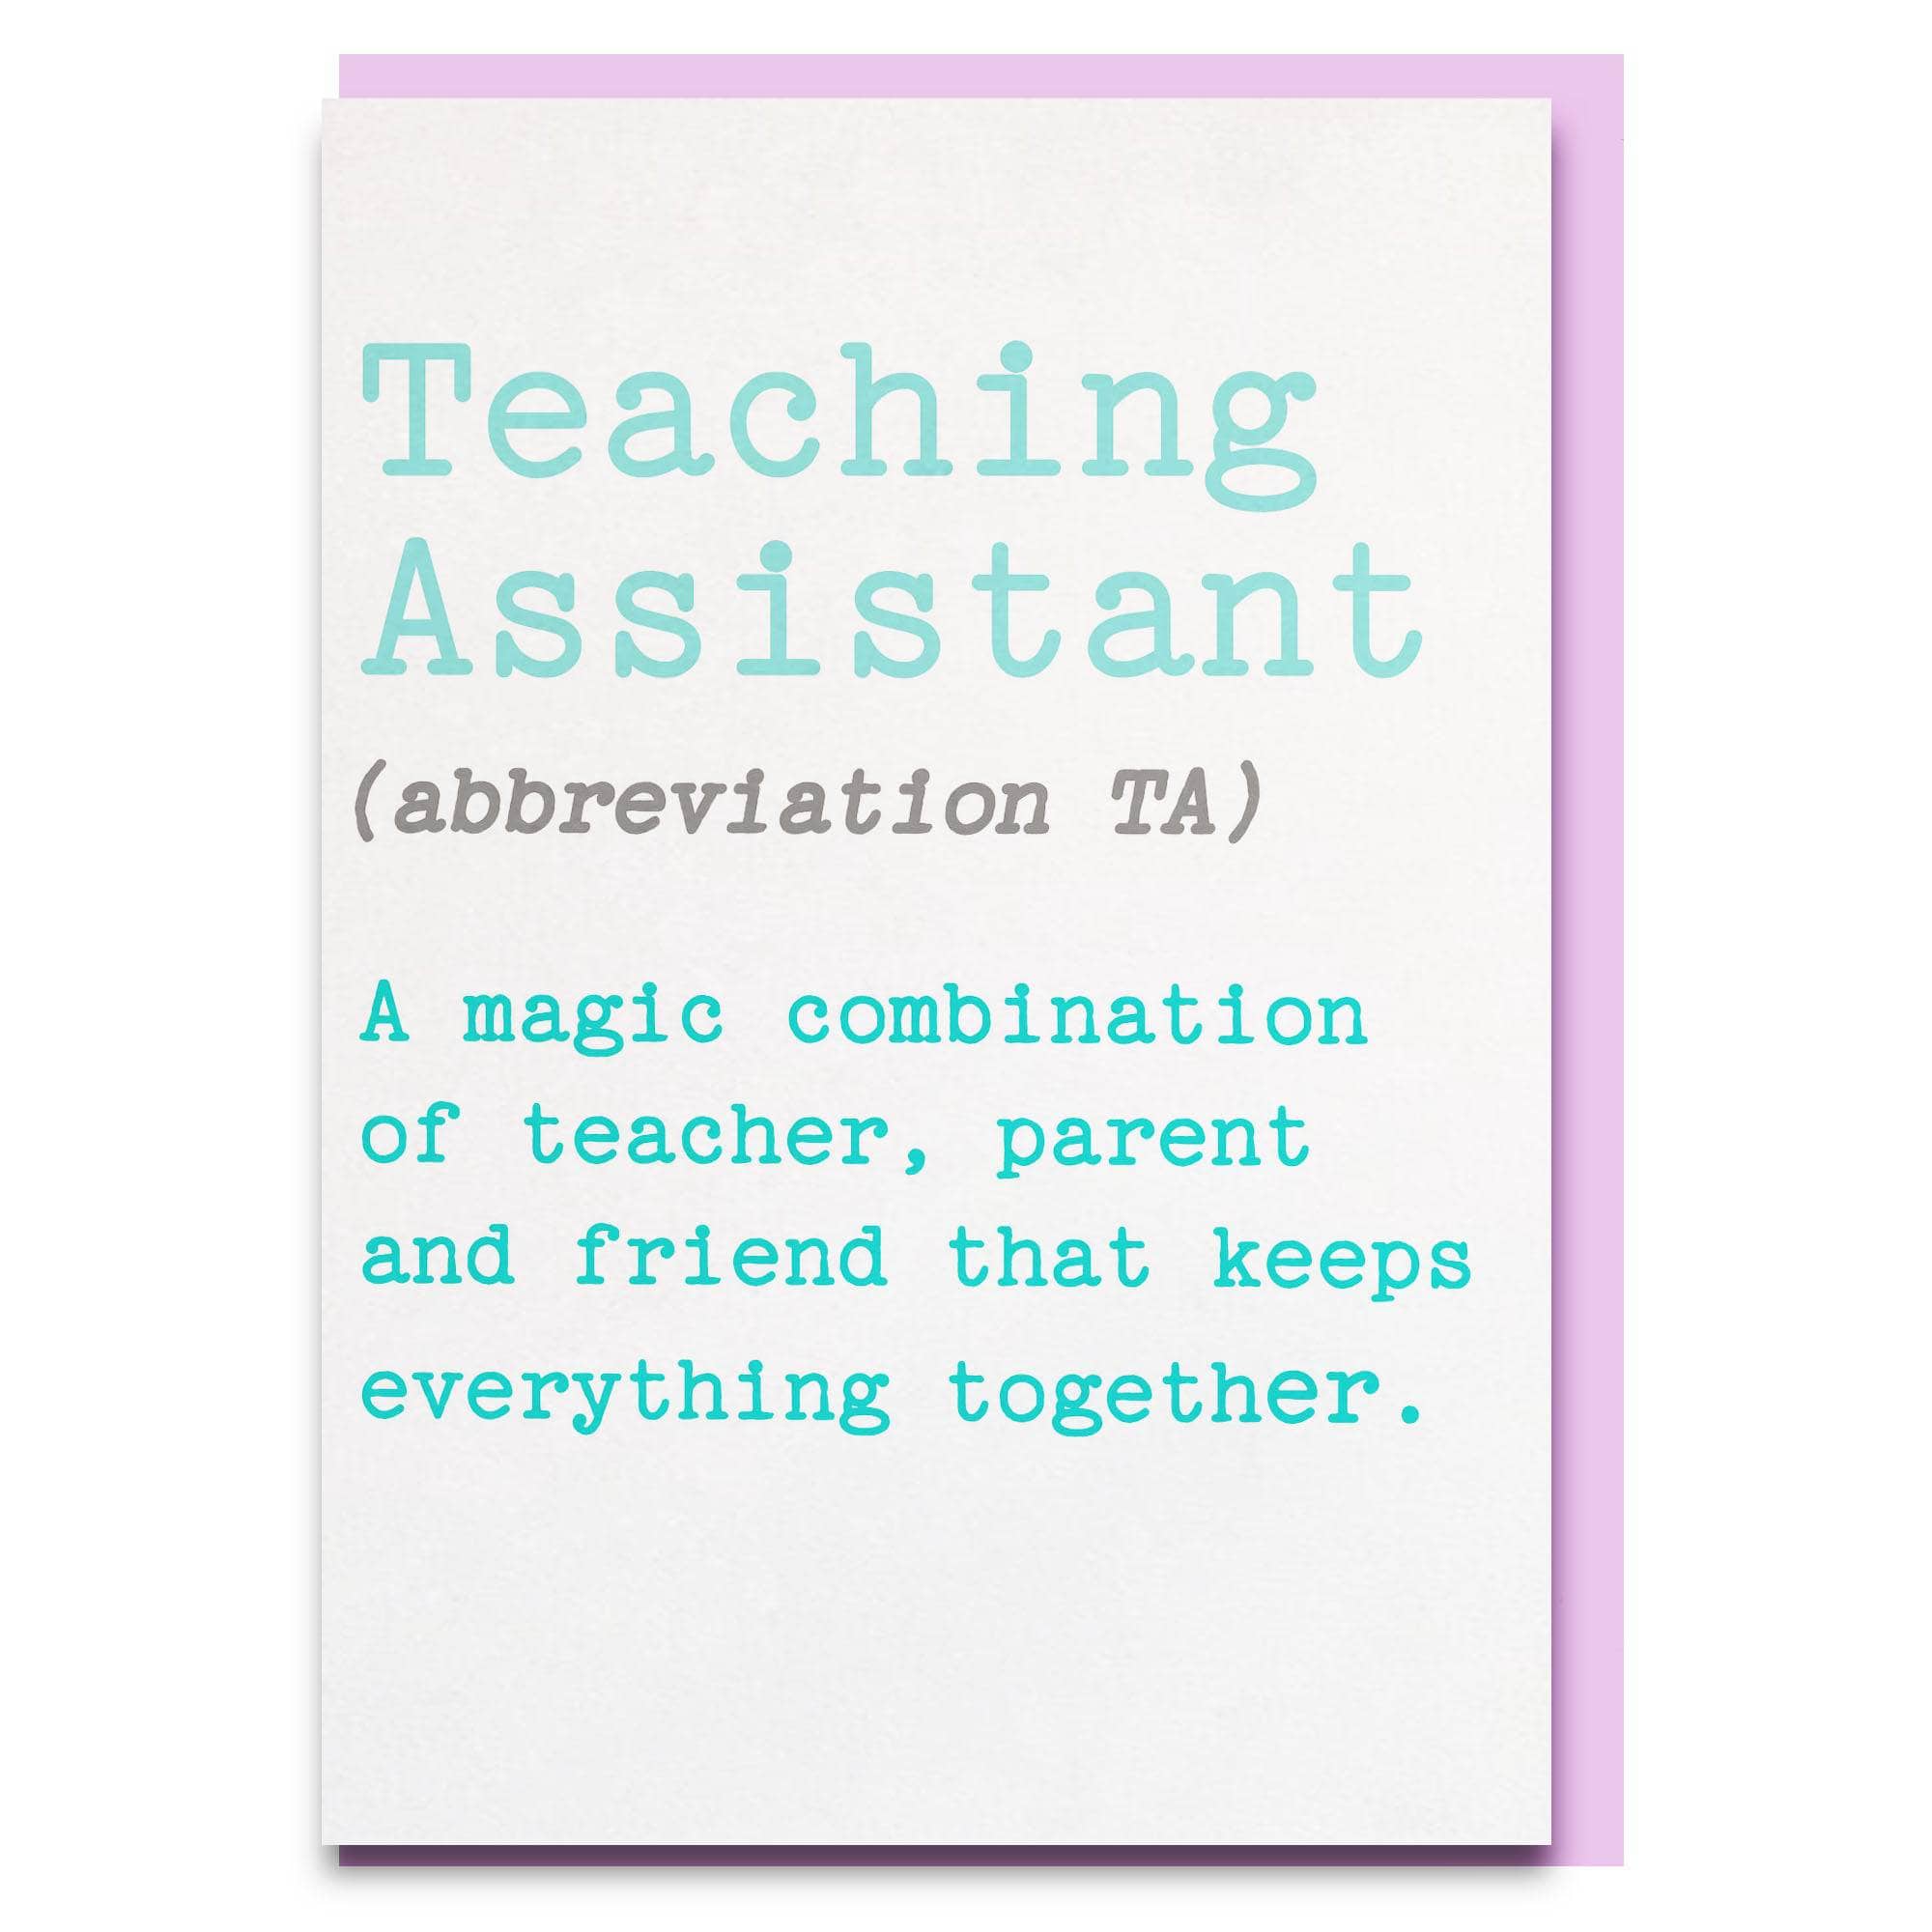 Teaching assistants